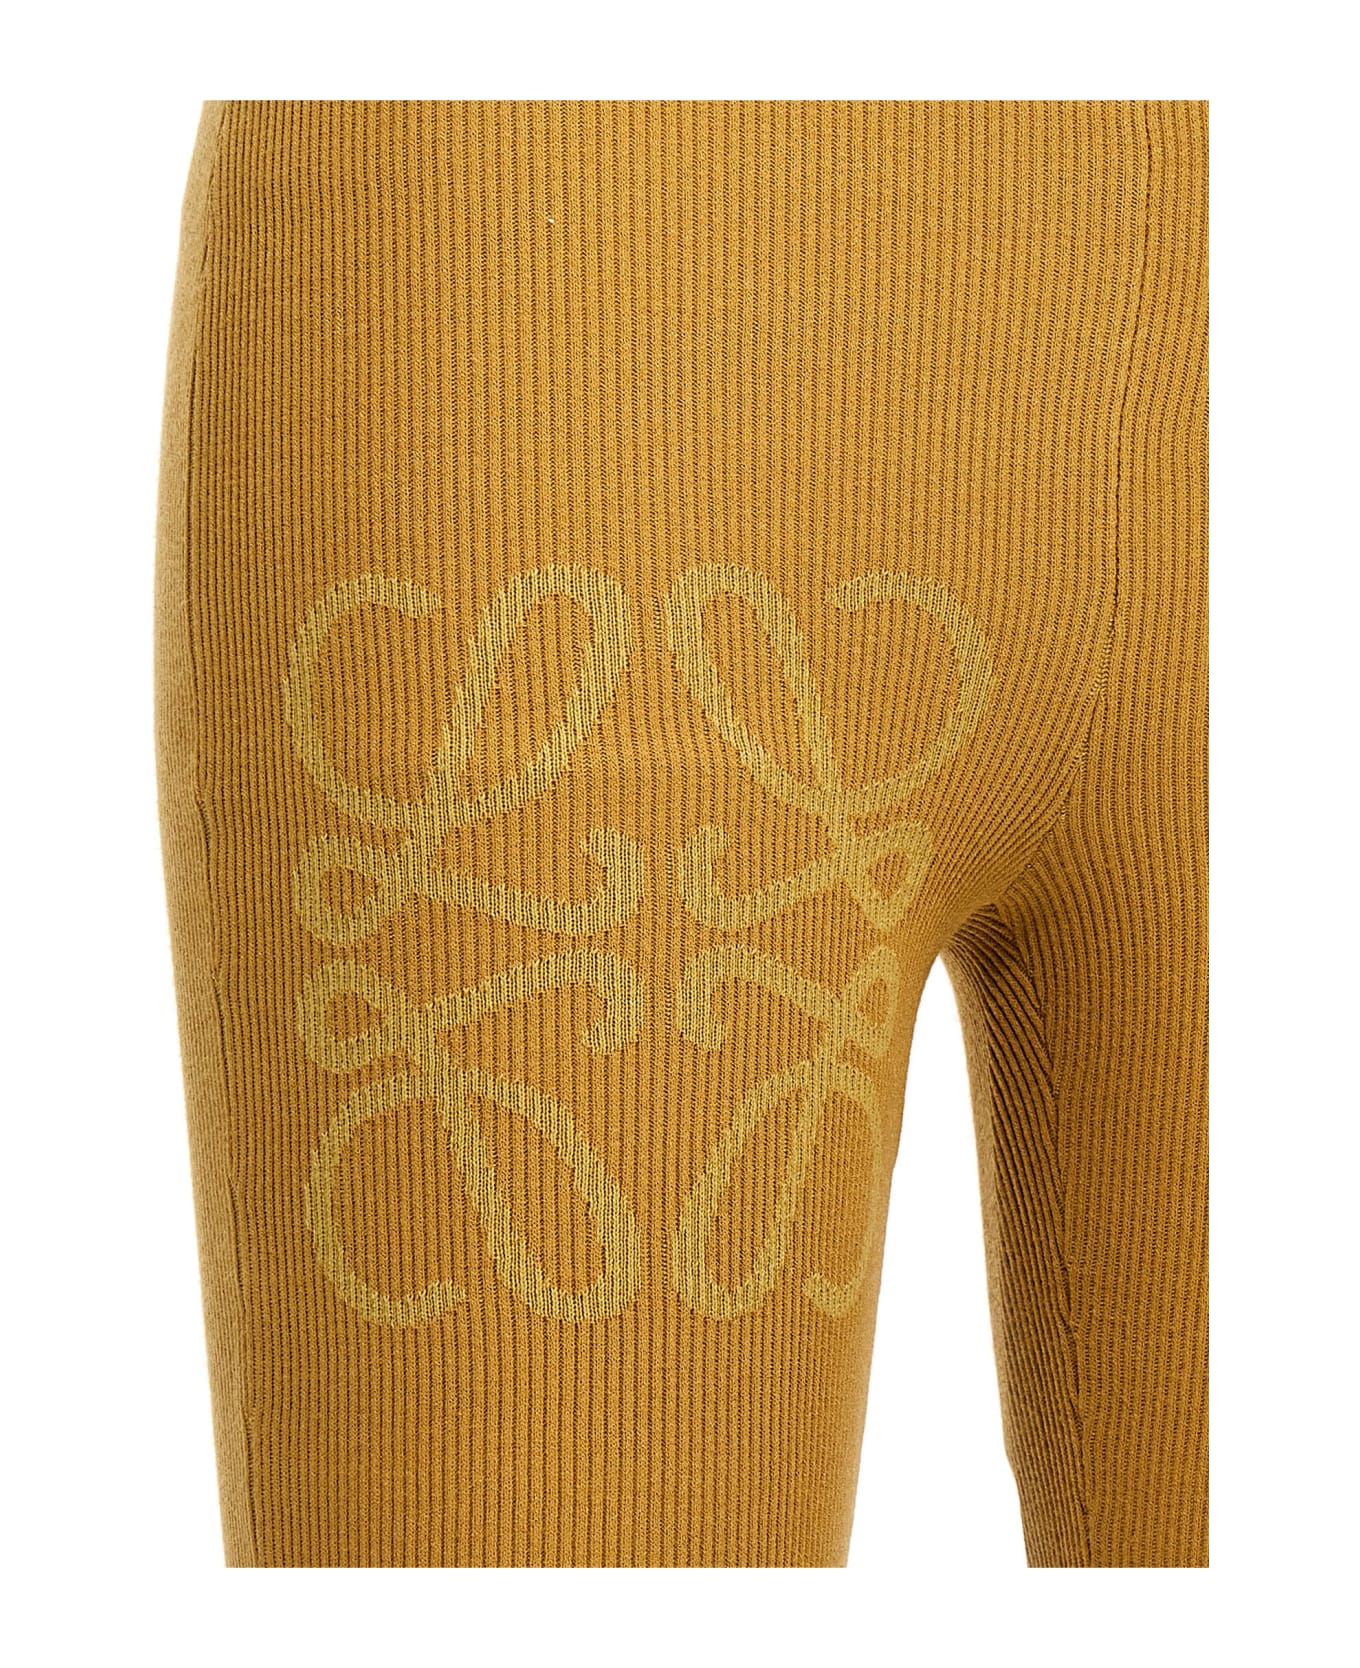 Loewe Paula's Ibiza Capsule Shorts - Beige ショートパンツ